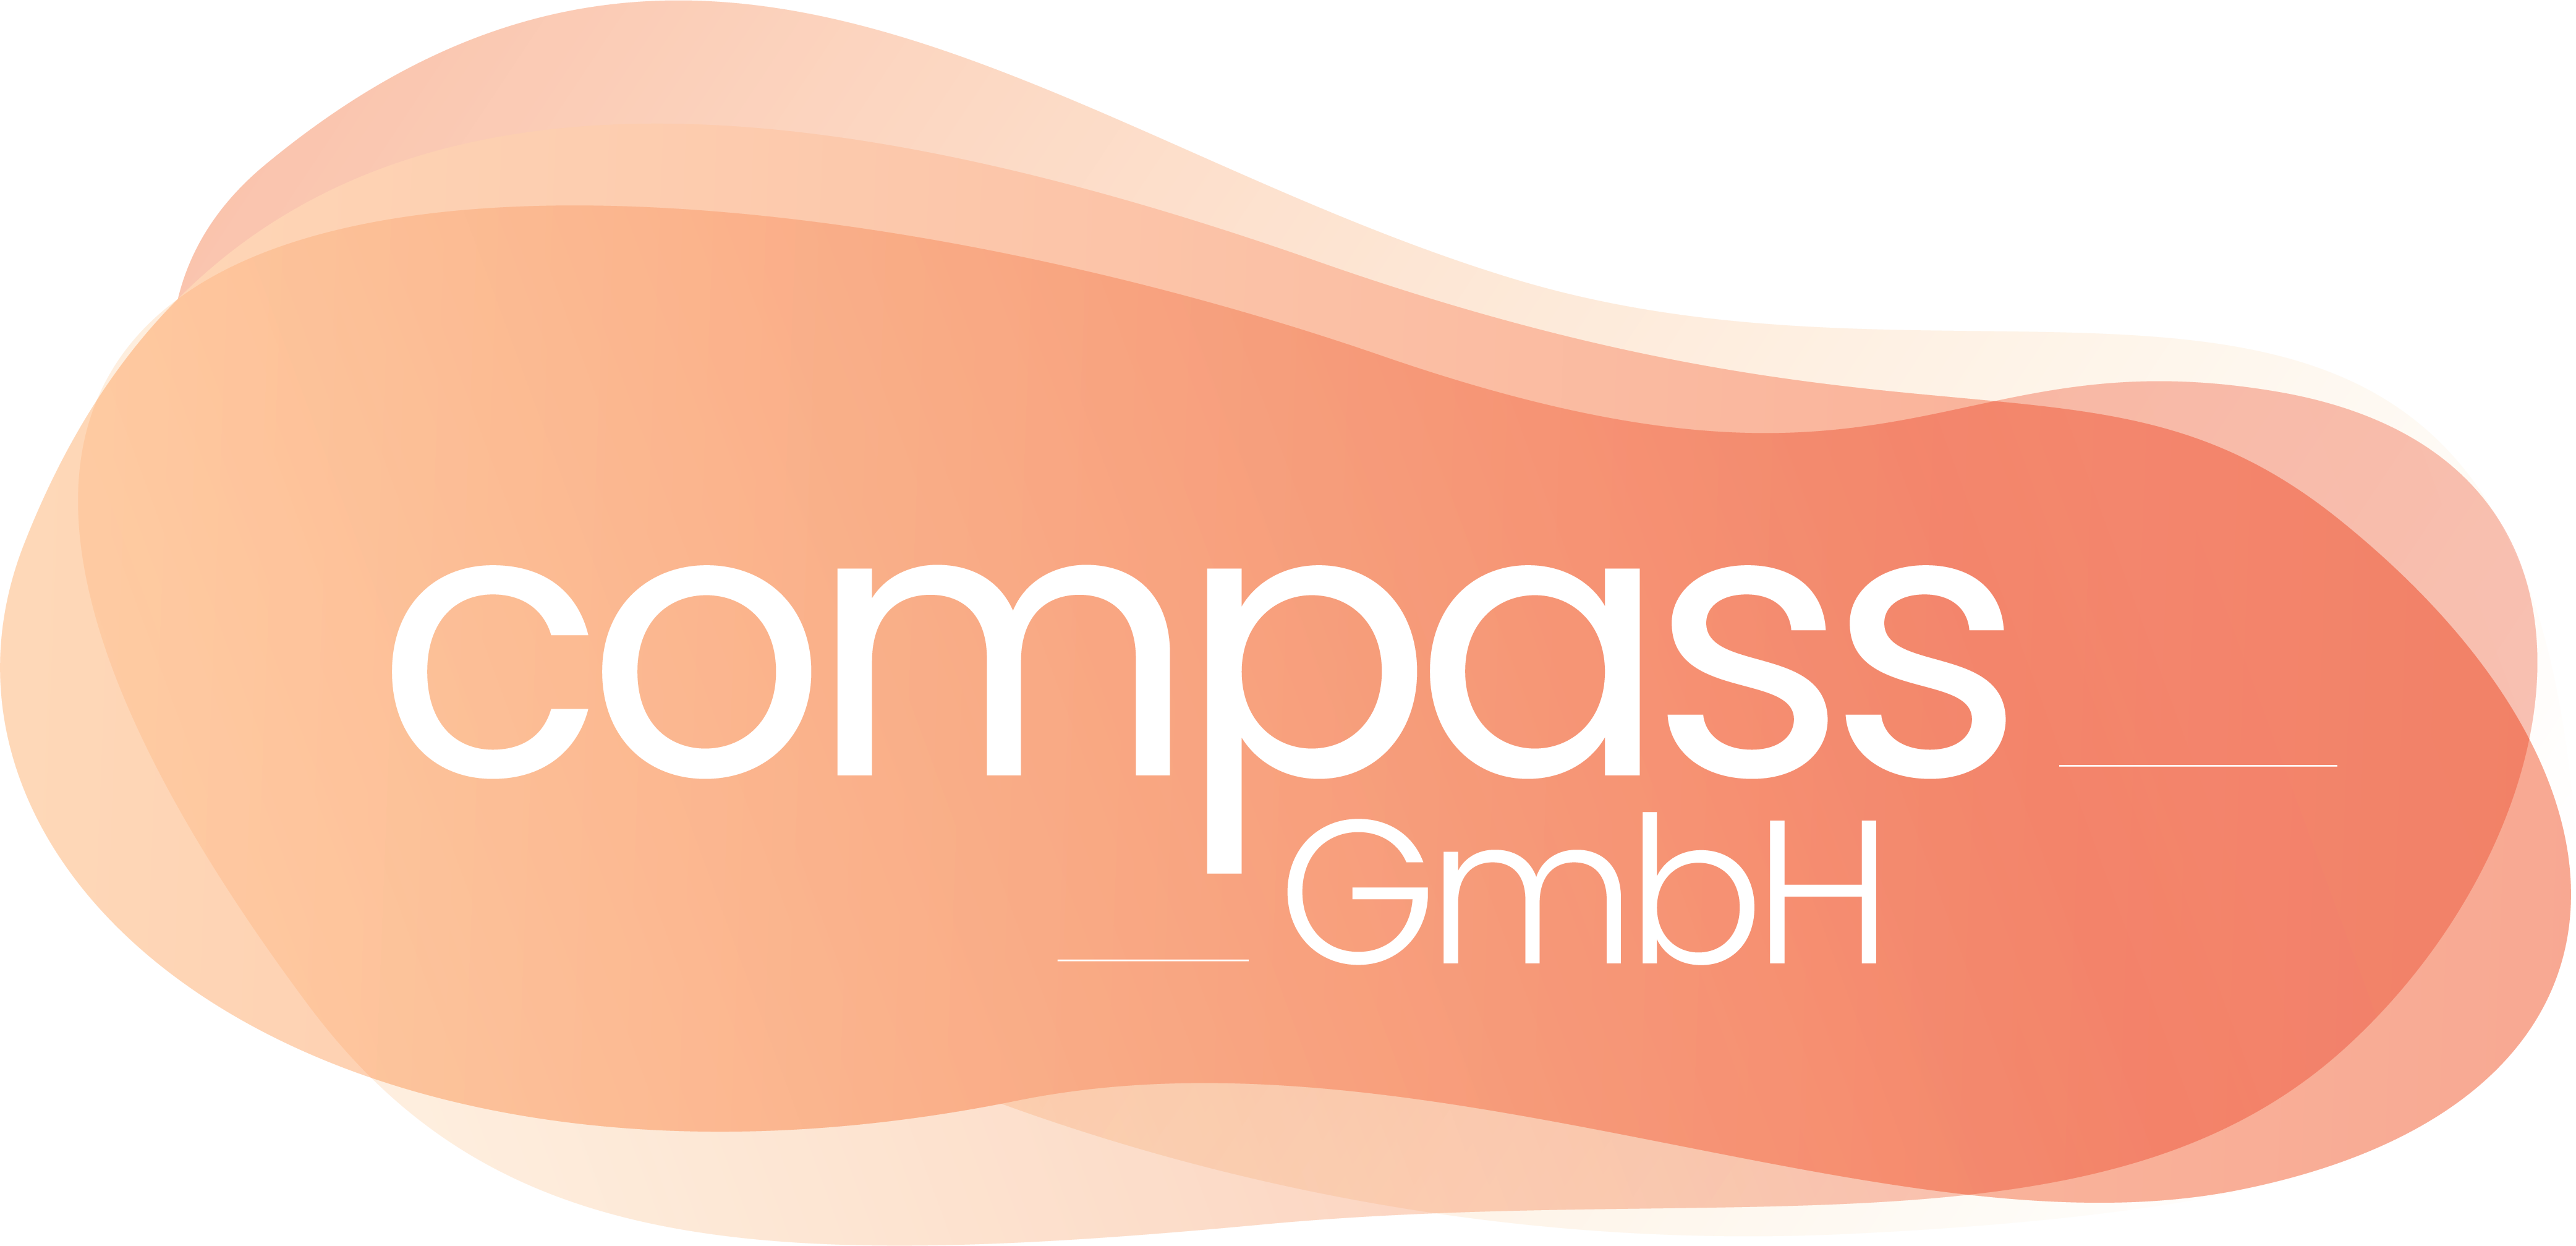 Compass GmbH